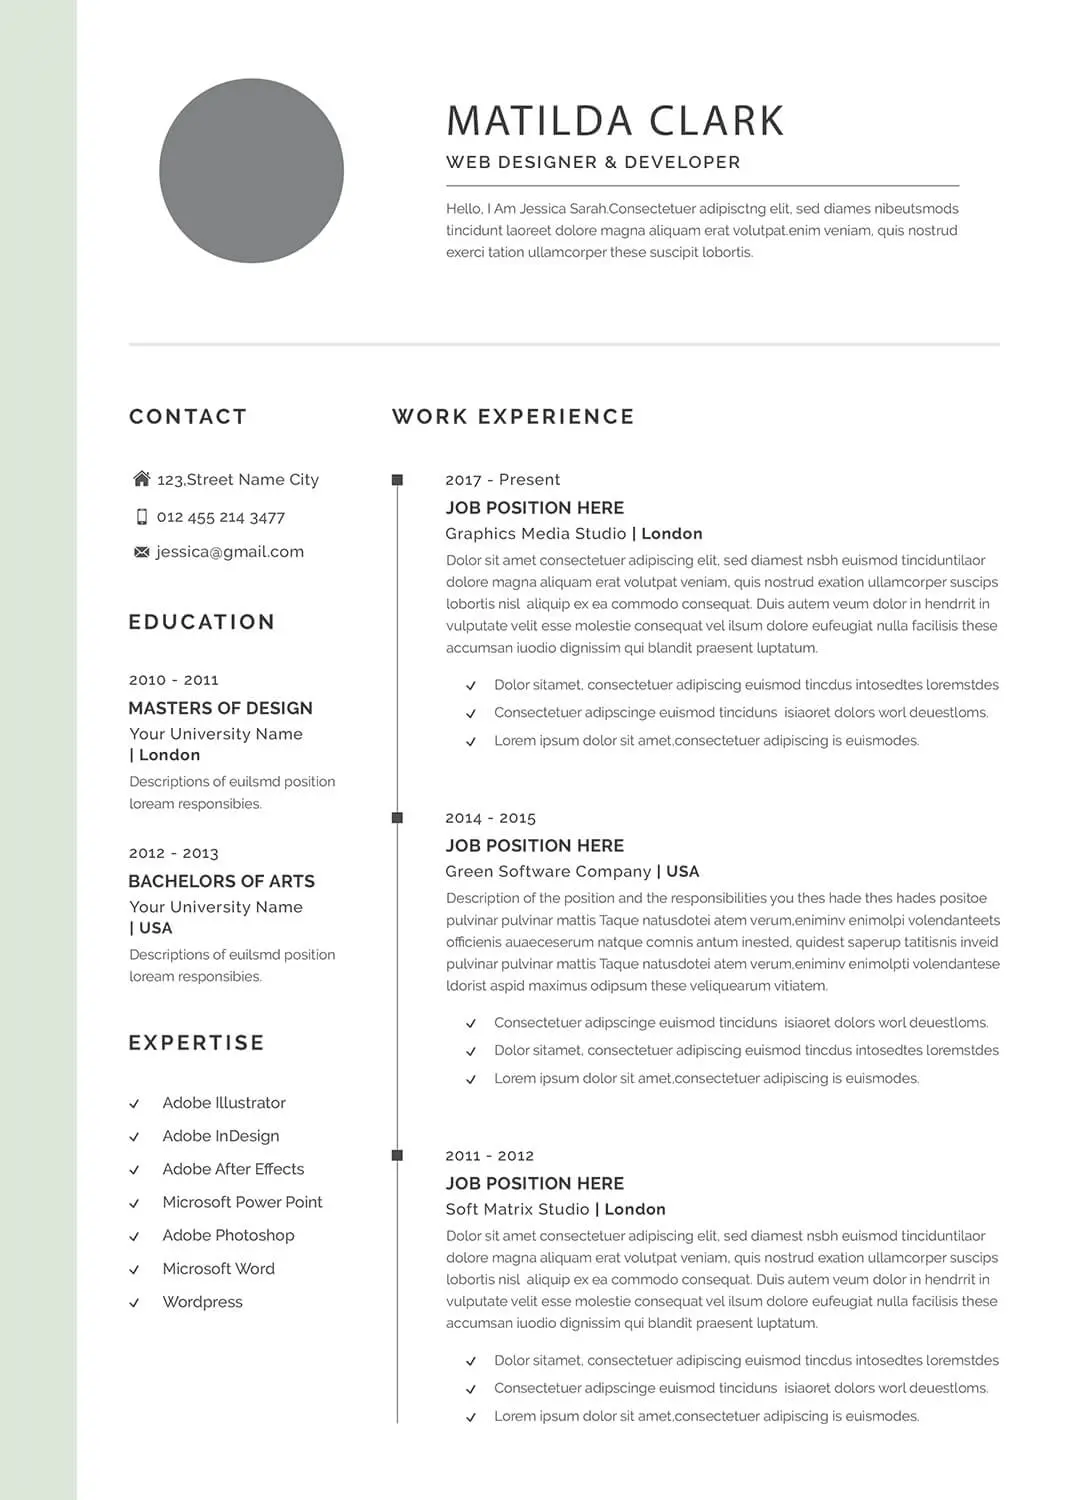 creative-director-resume